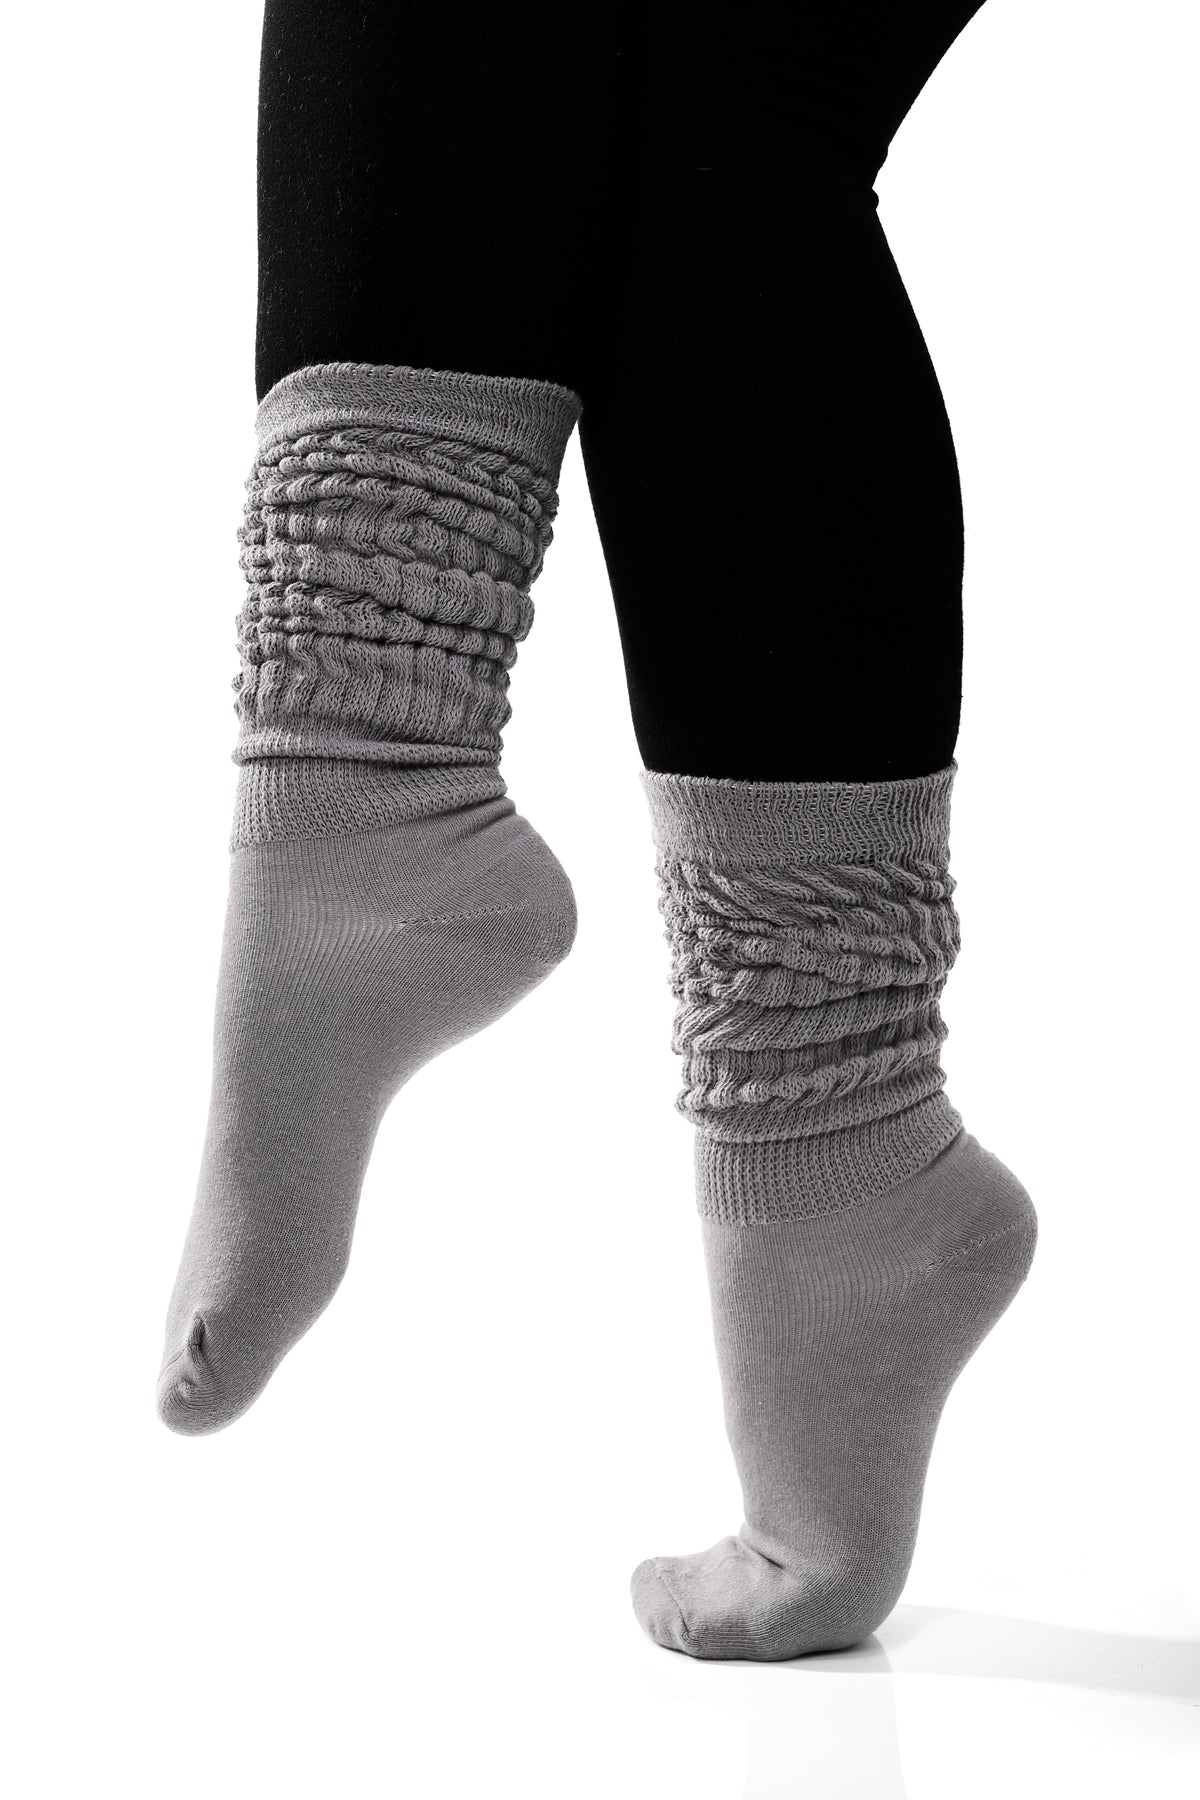 grey scrunch socks on a foot